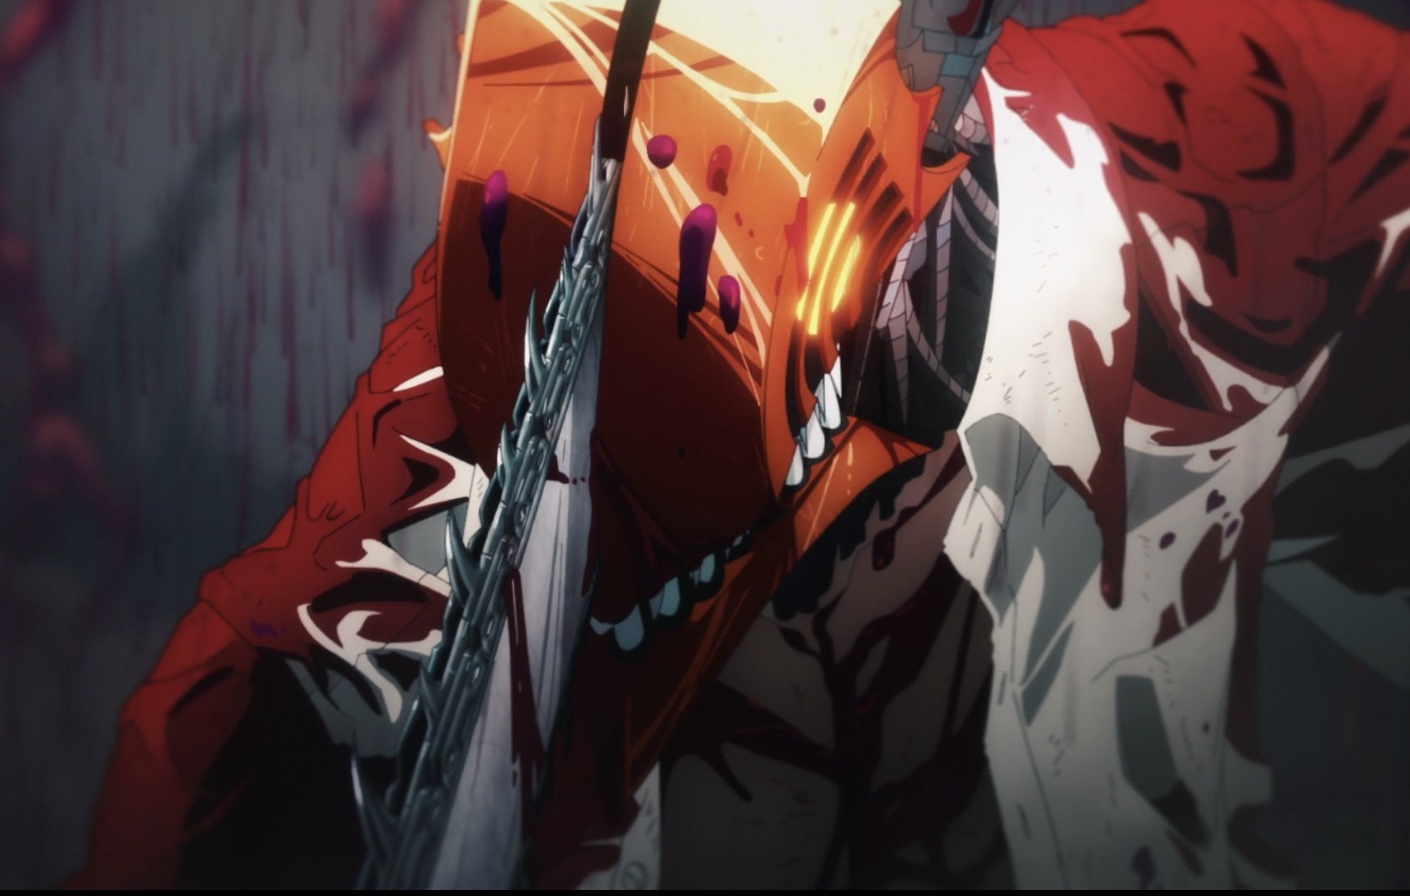 Chainsaw Man' anime season 1 finale: How, where to watch, stream